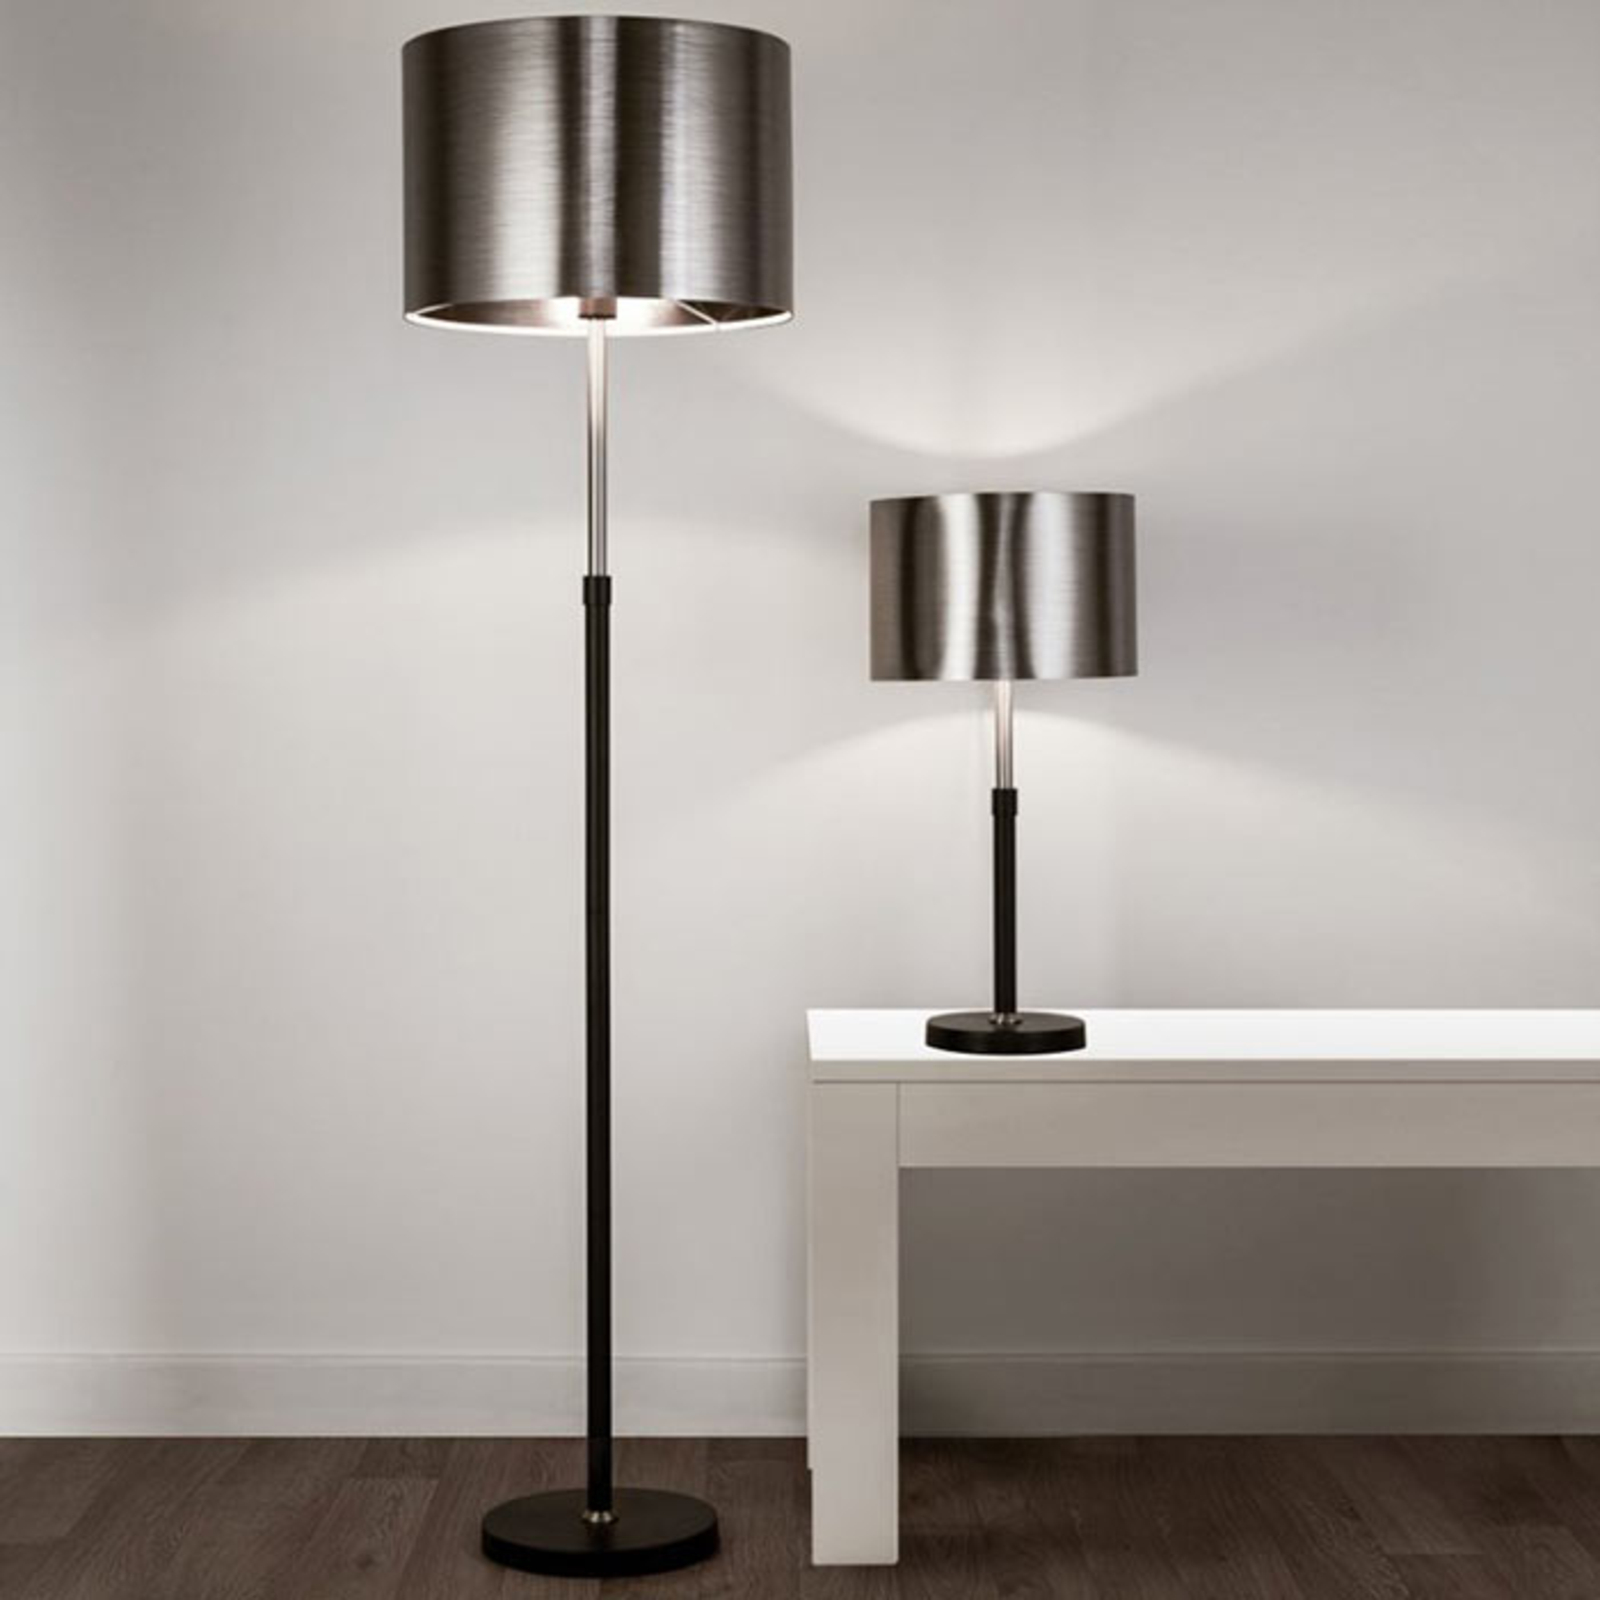 Column Floor Lamp With A Metal, Column Floor Lamp Shade